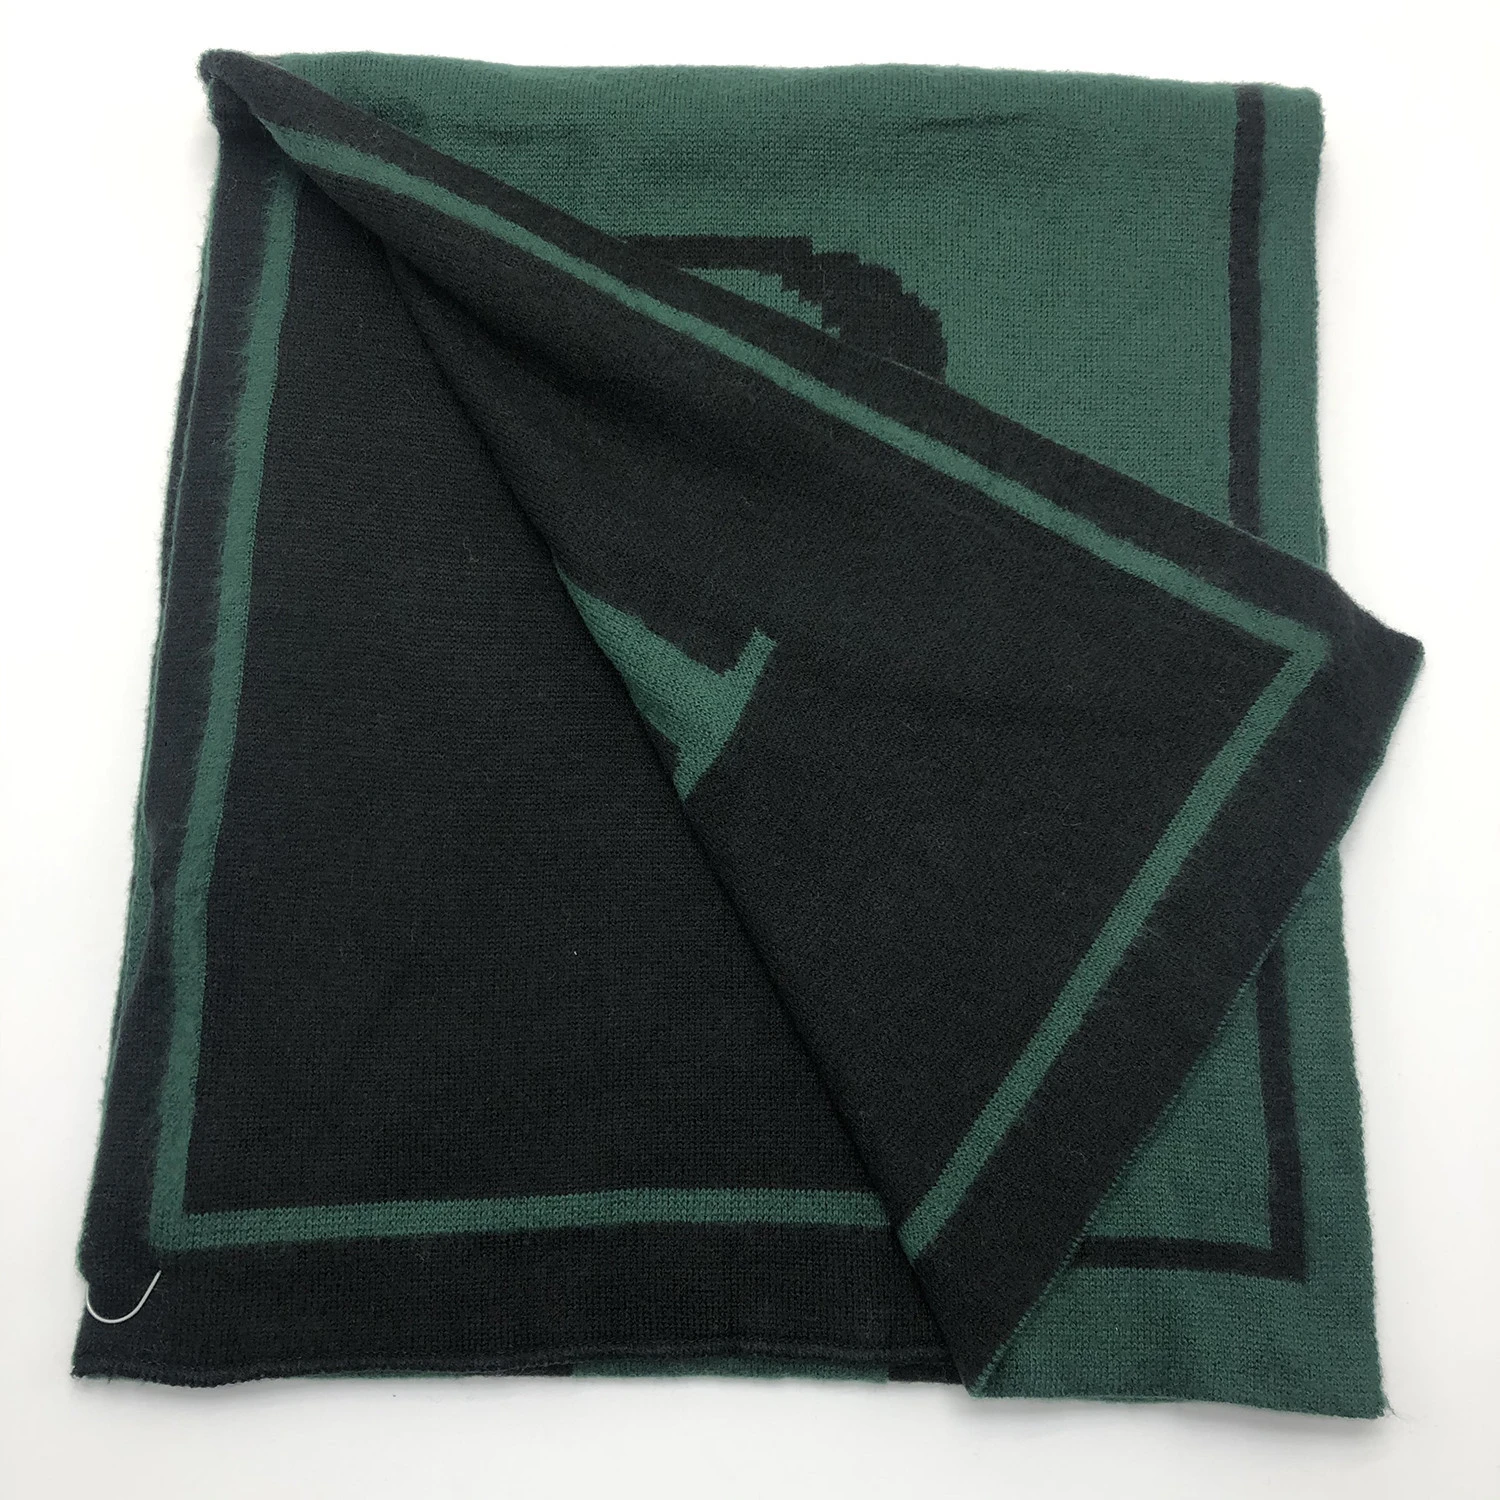 ALLCH Whosale Pashmina Letter Jacquard Custom Neck Scarf Shawl Knitted Long Wrap Blanket Winter Hijab Sport Scarves